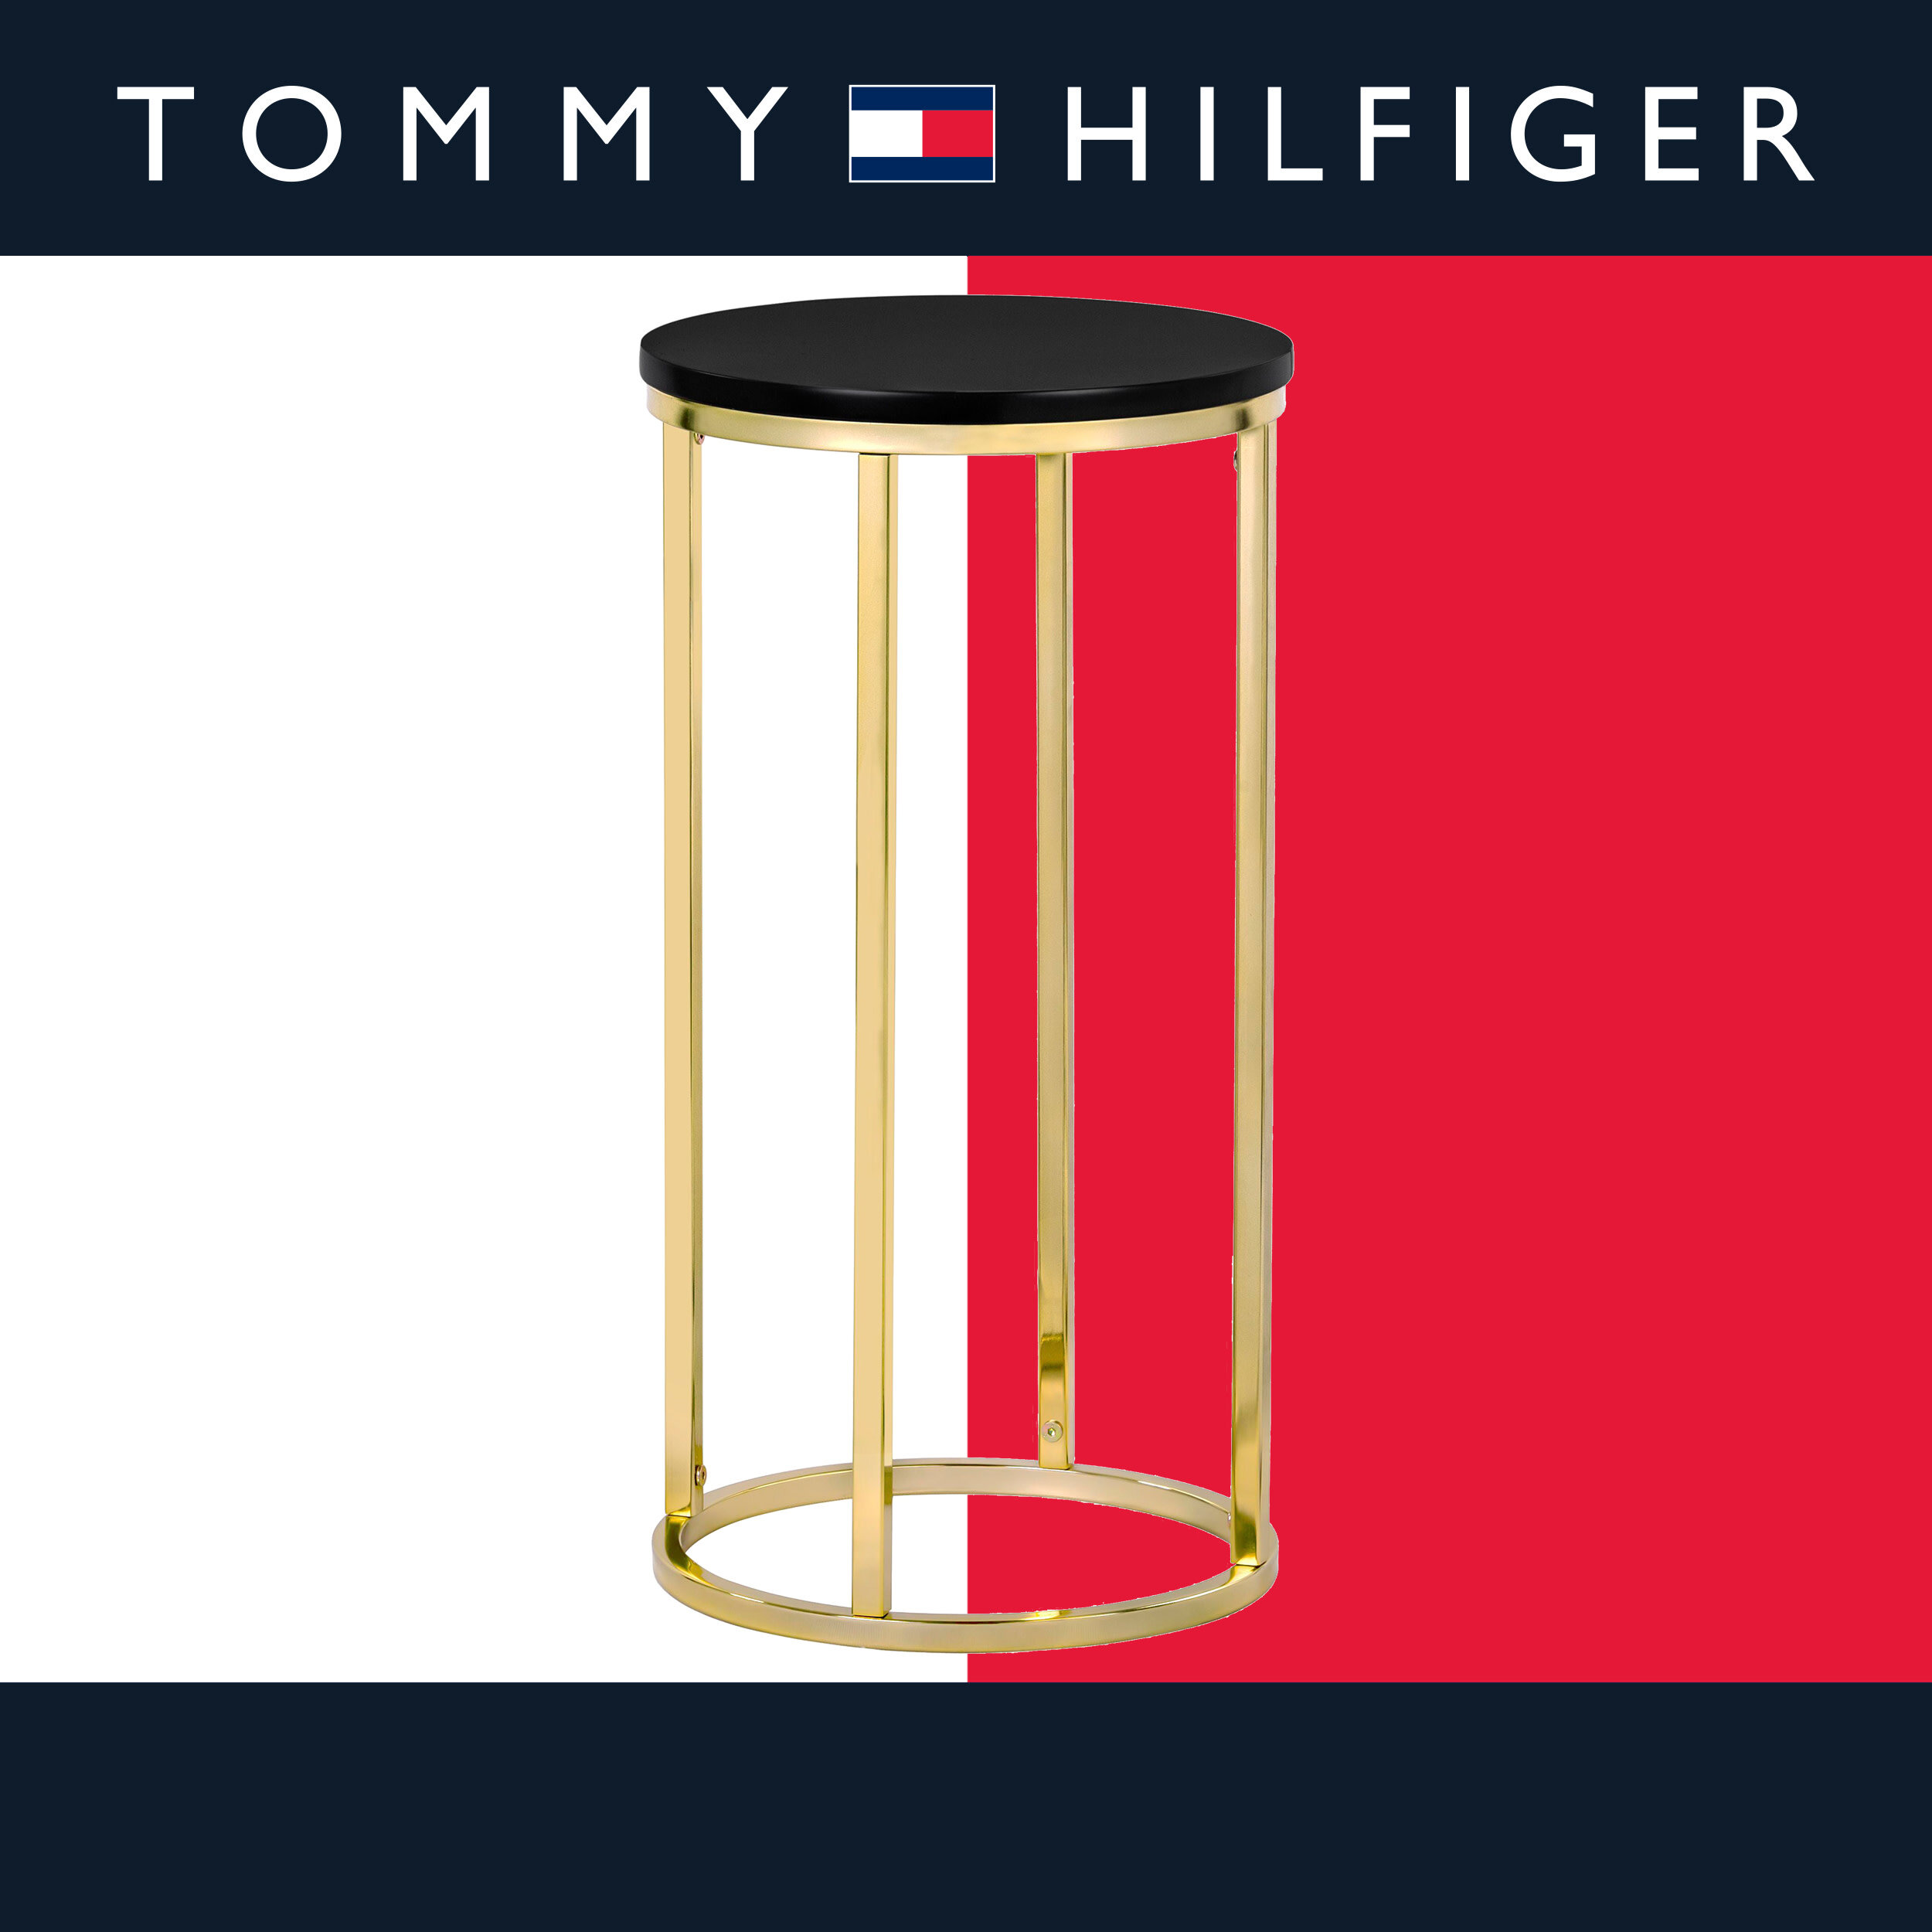 GloRilla Scores Major Deal w/ Tommy Hilfiger: 'I Feel Highly